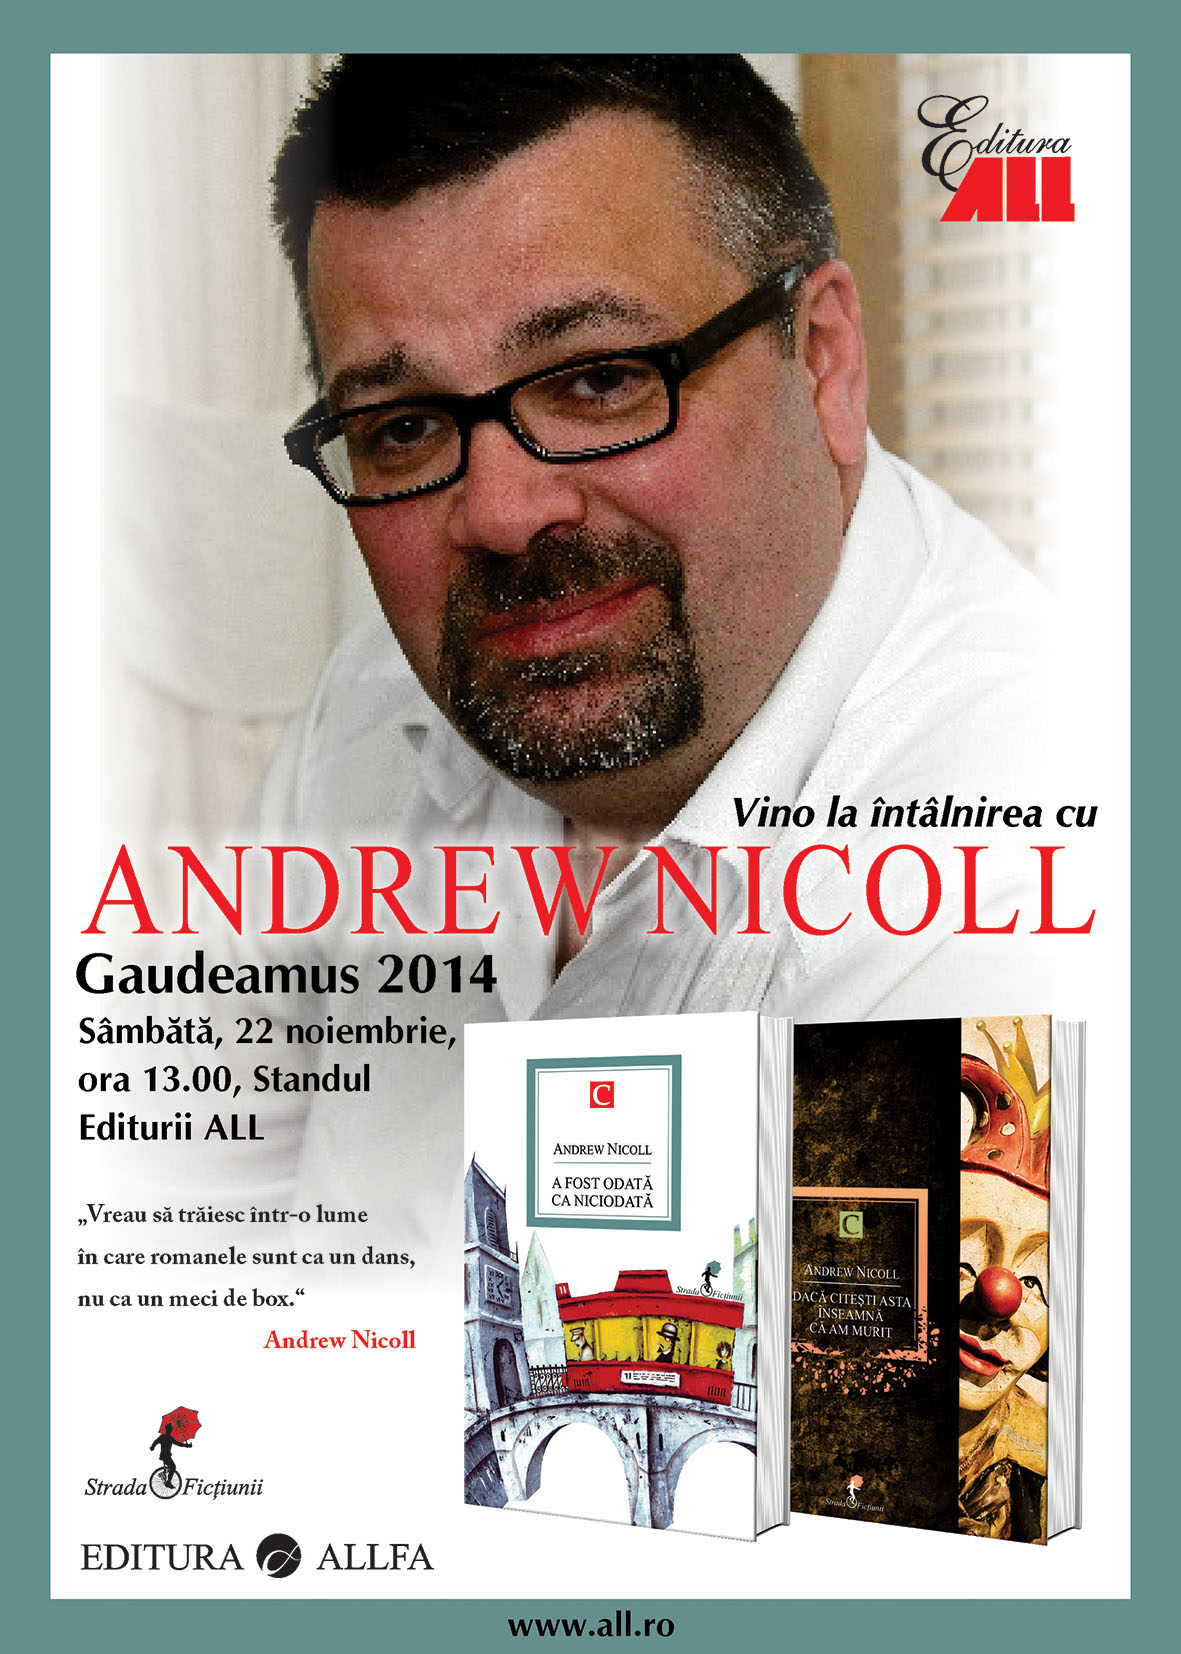 Andrew Nicoll, invitatul Editurilor ALL la Gaudeamus 2014